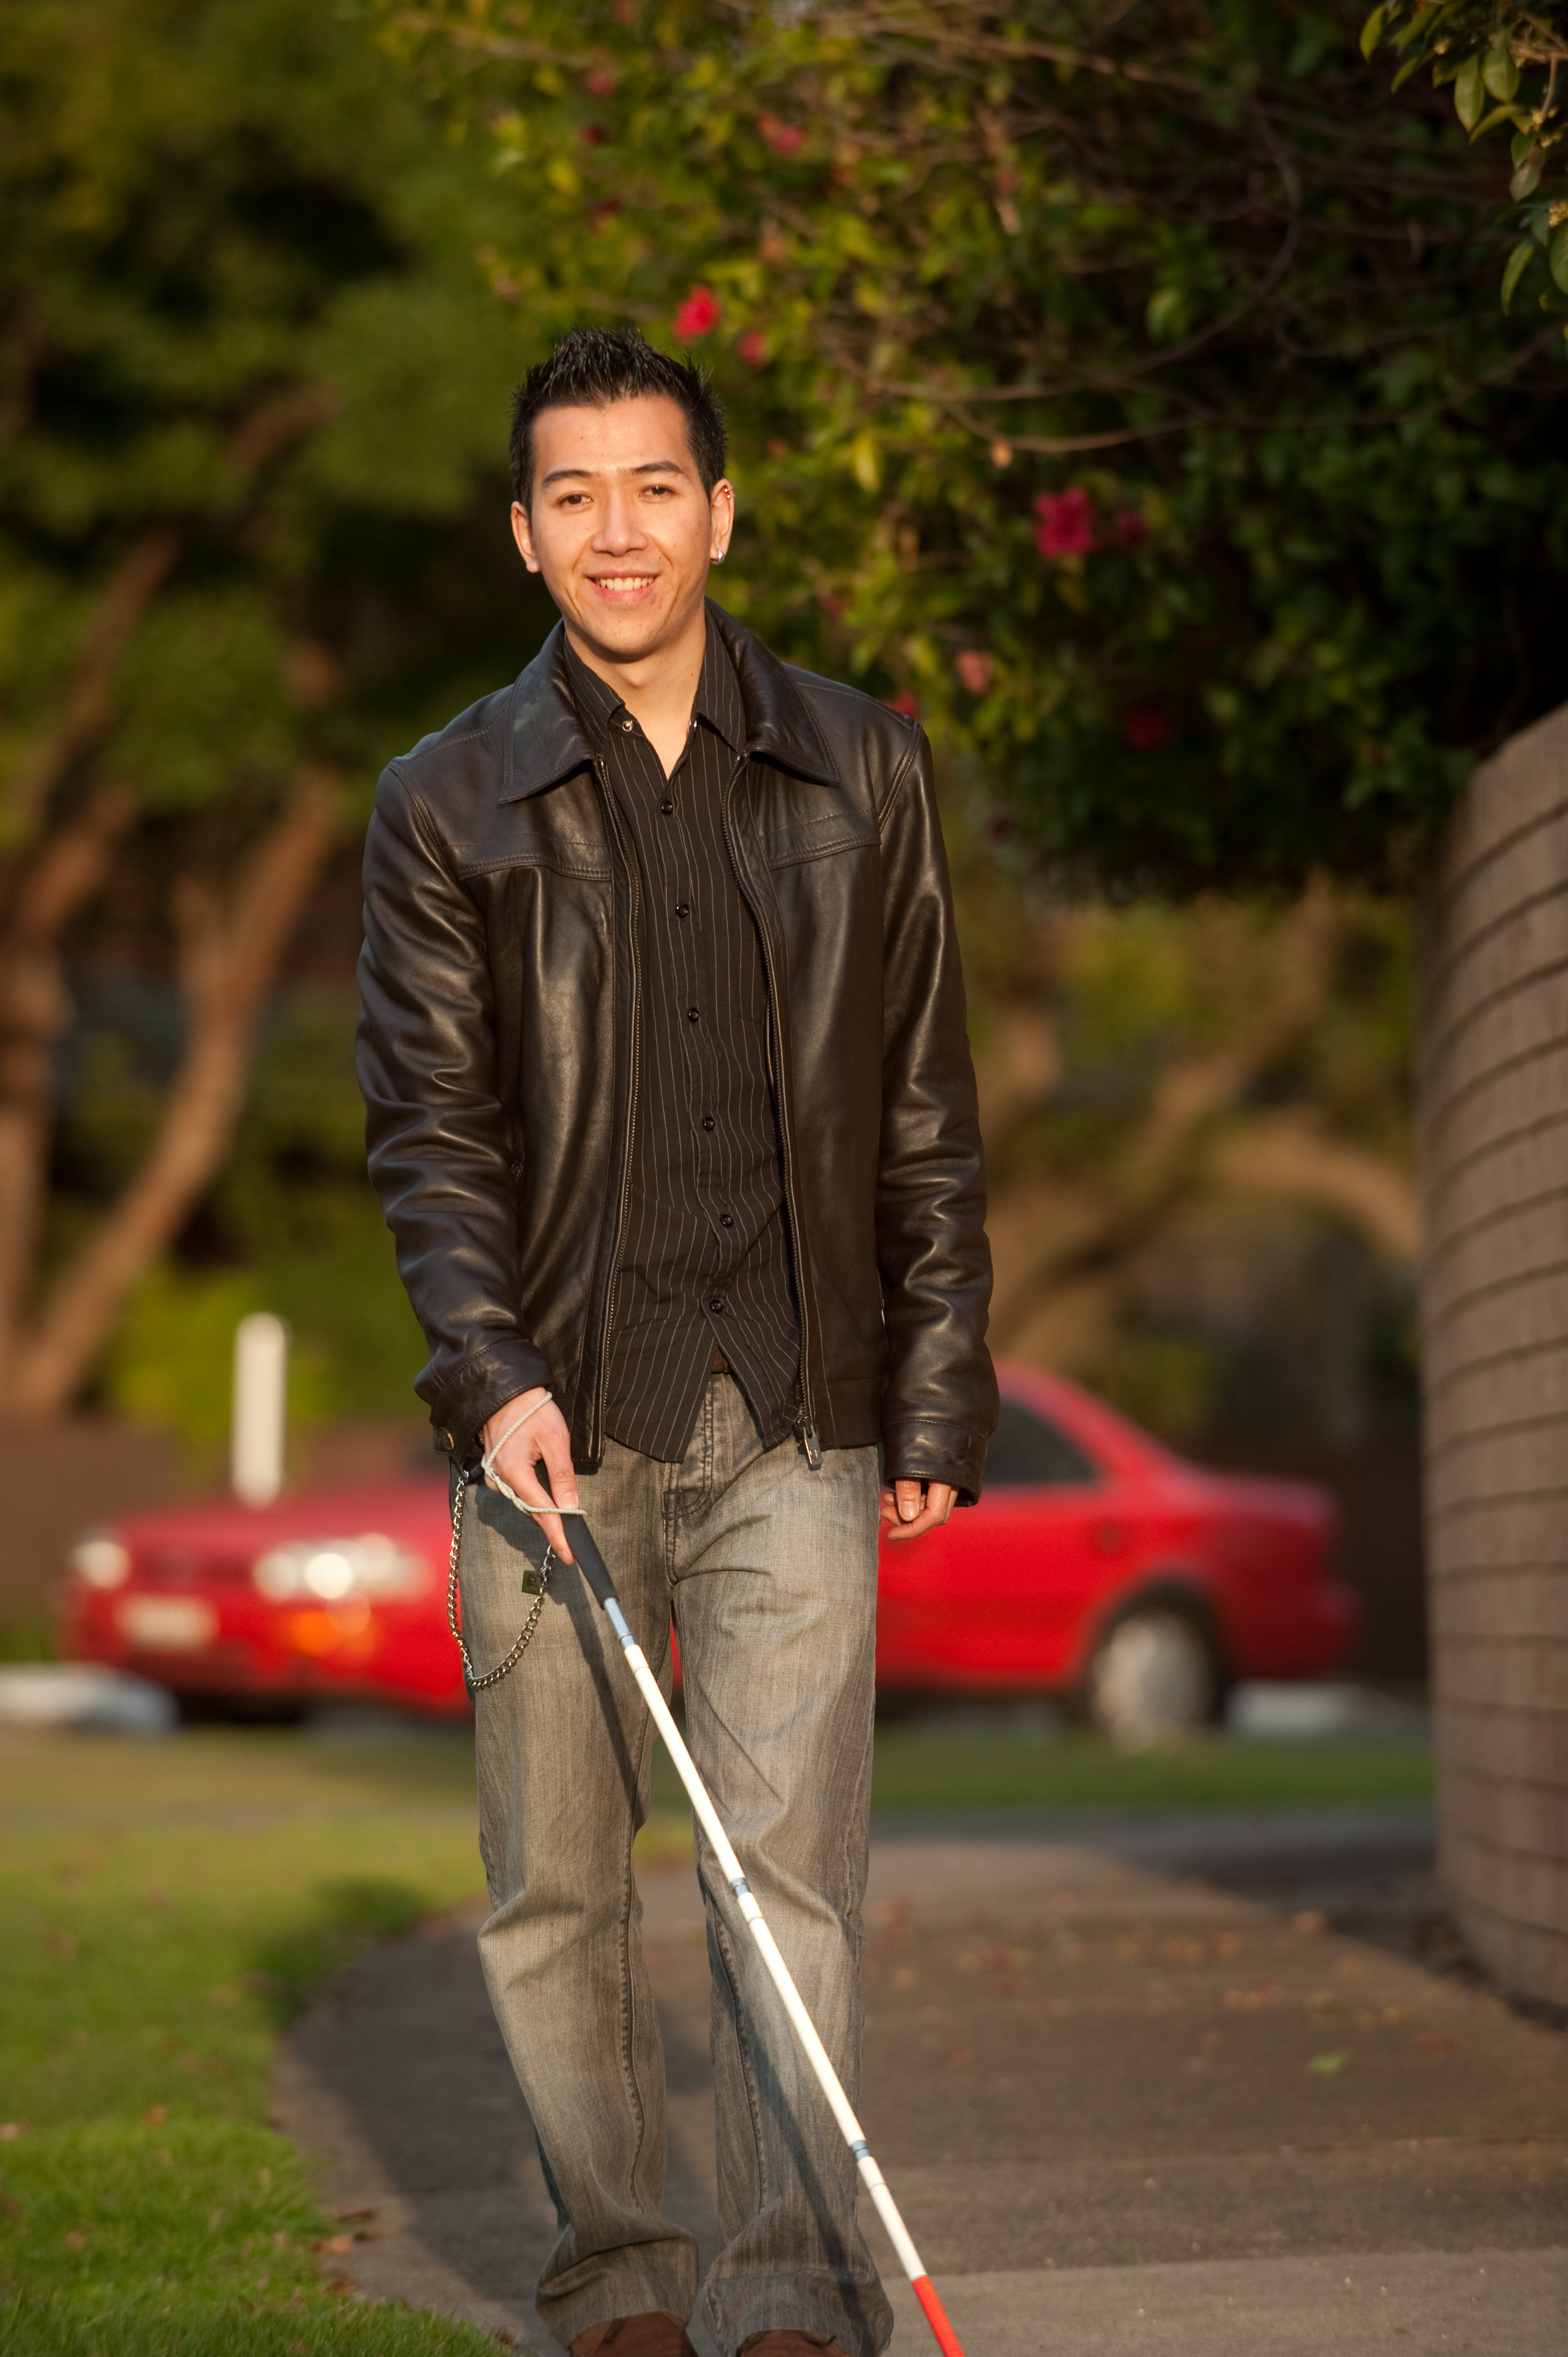 Photo of Dawson walking along a footpath using his cane